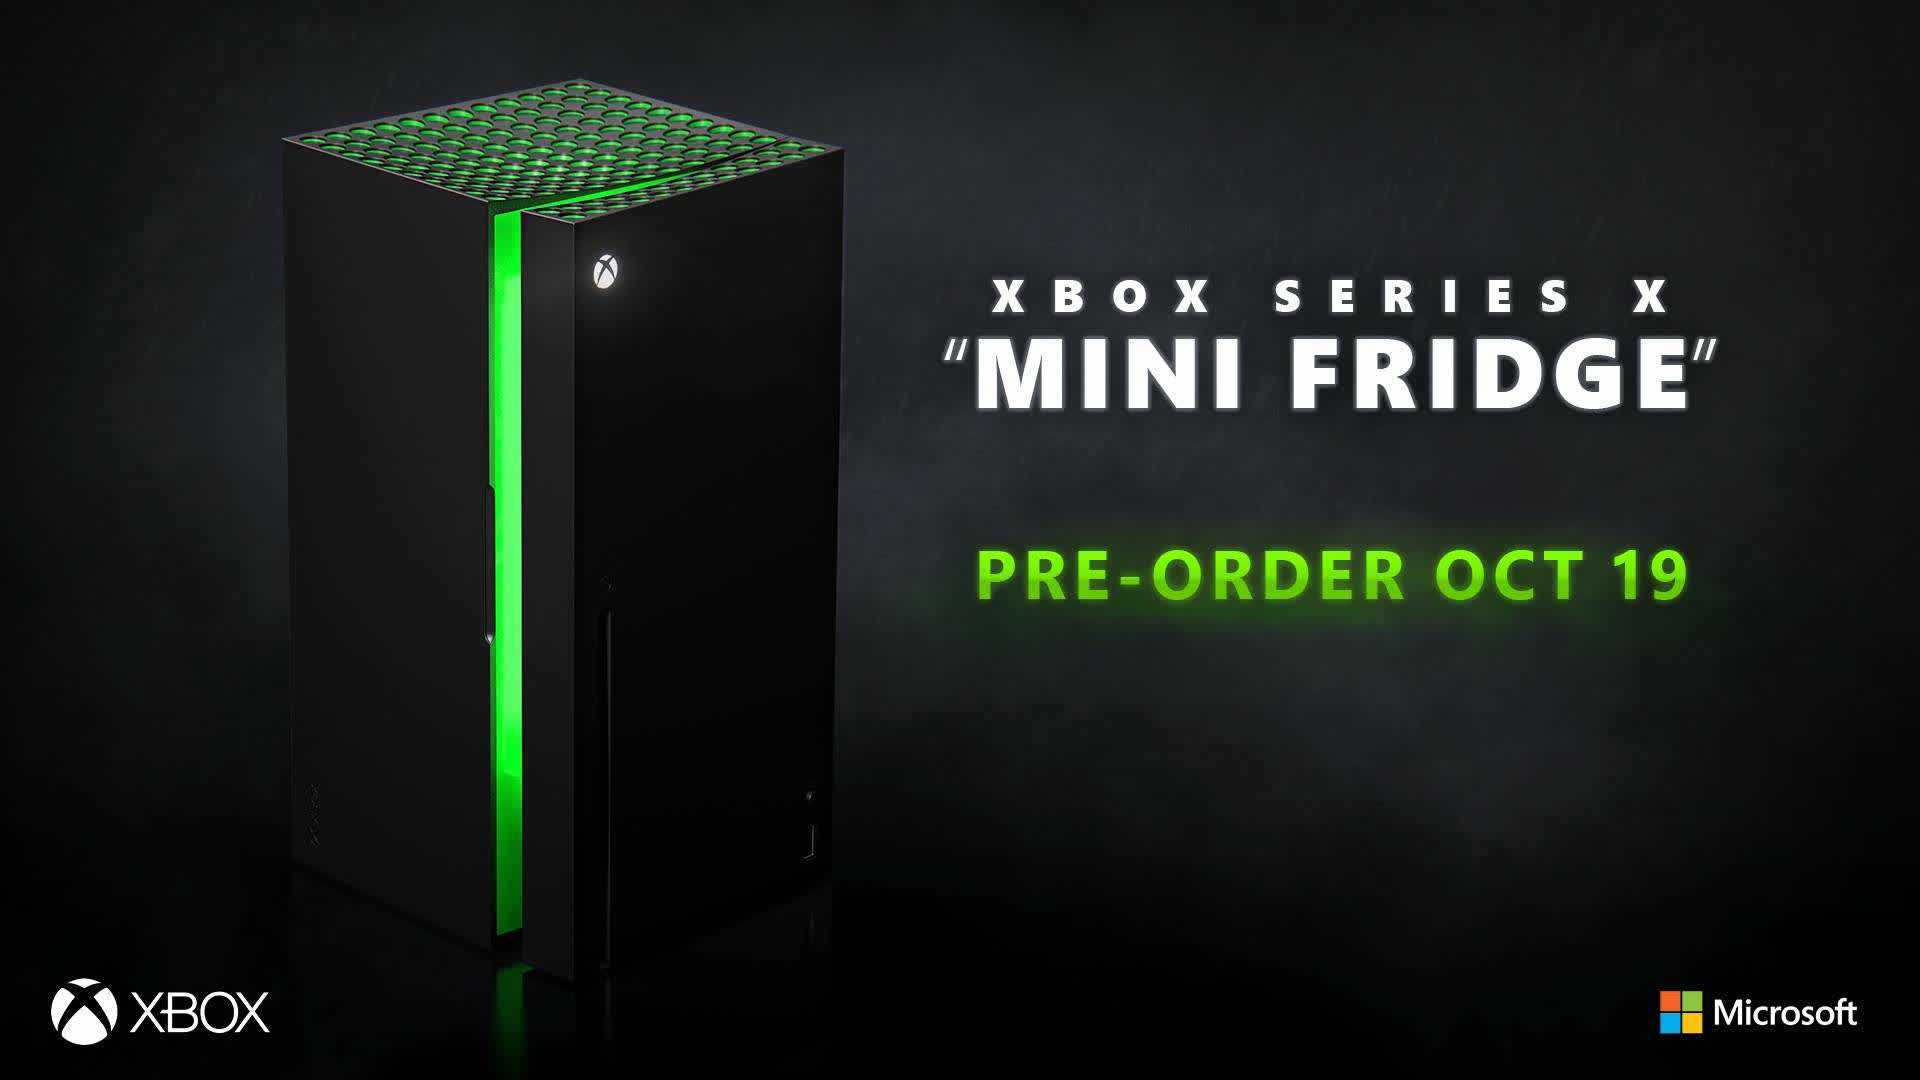 Xbox Series X mini fridge pre-orders open next week